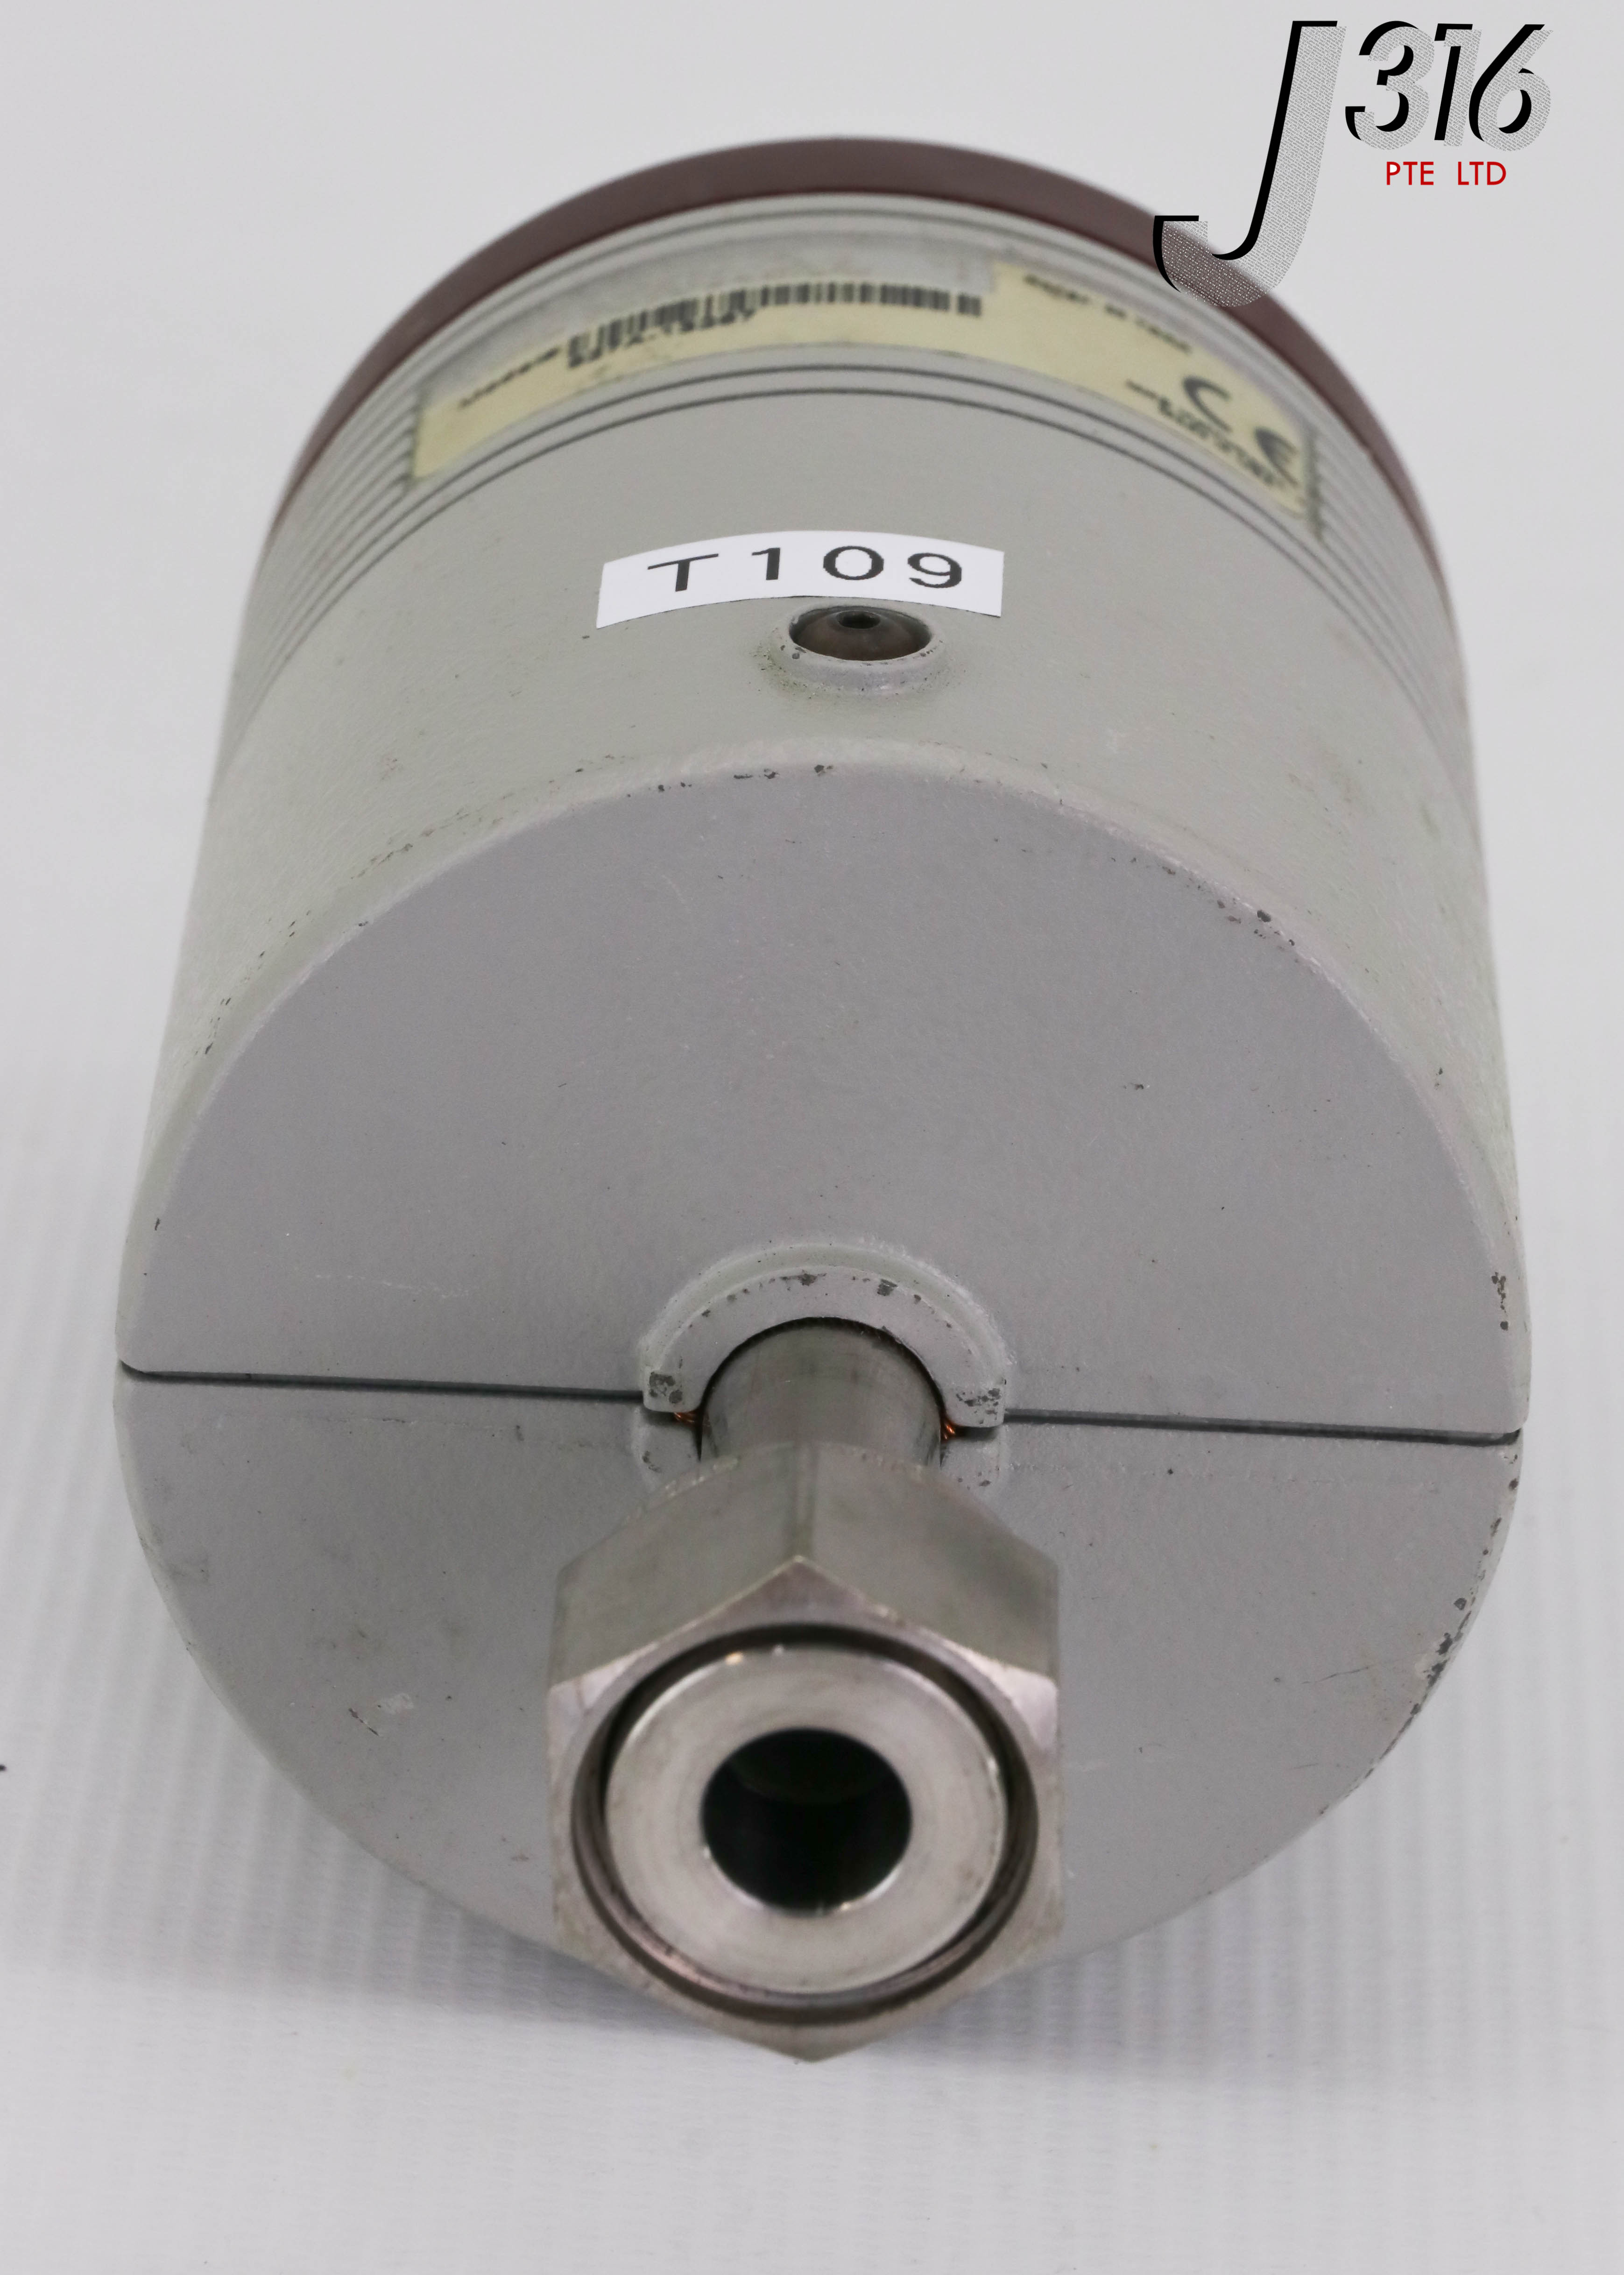 MKS Baratron Pressure Transducer 870B-24539 